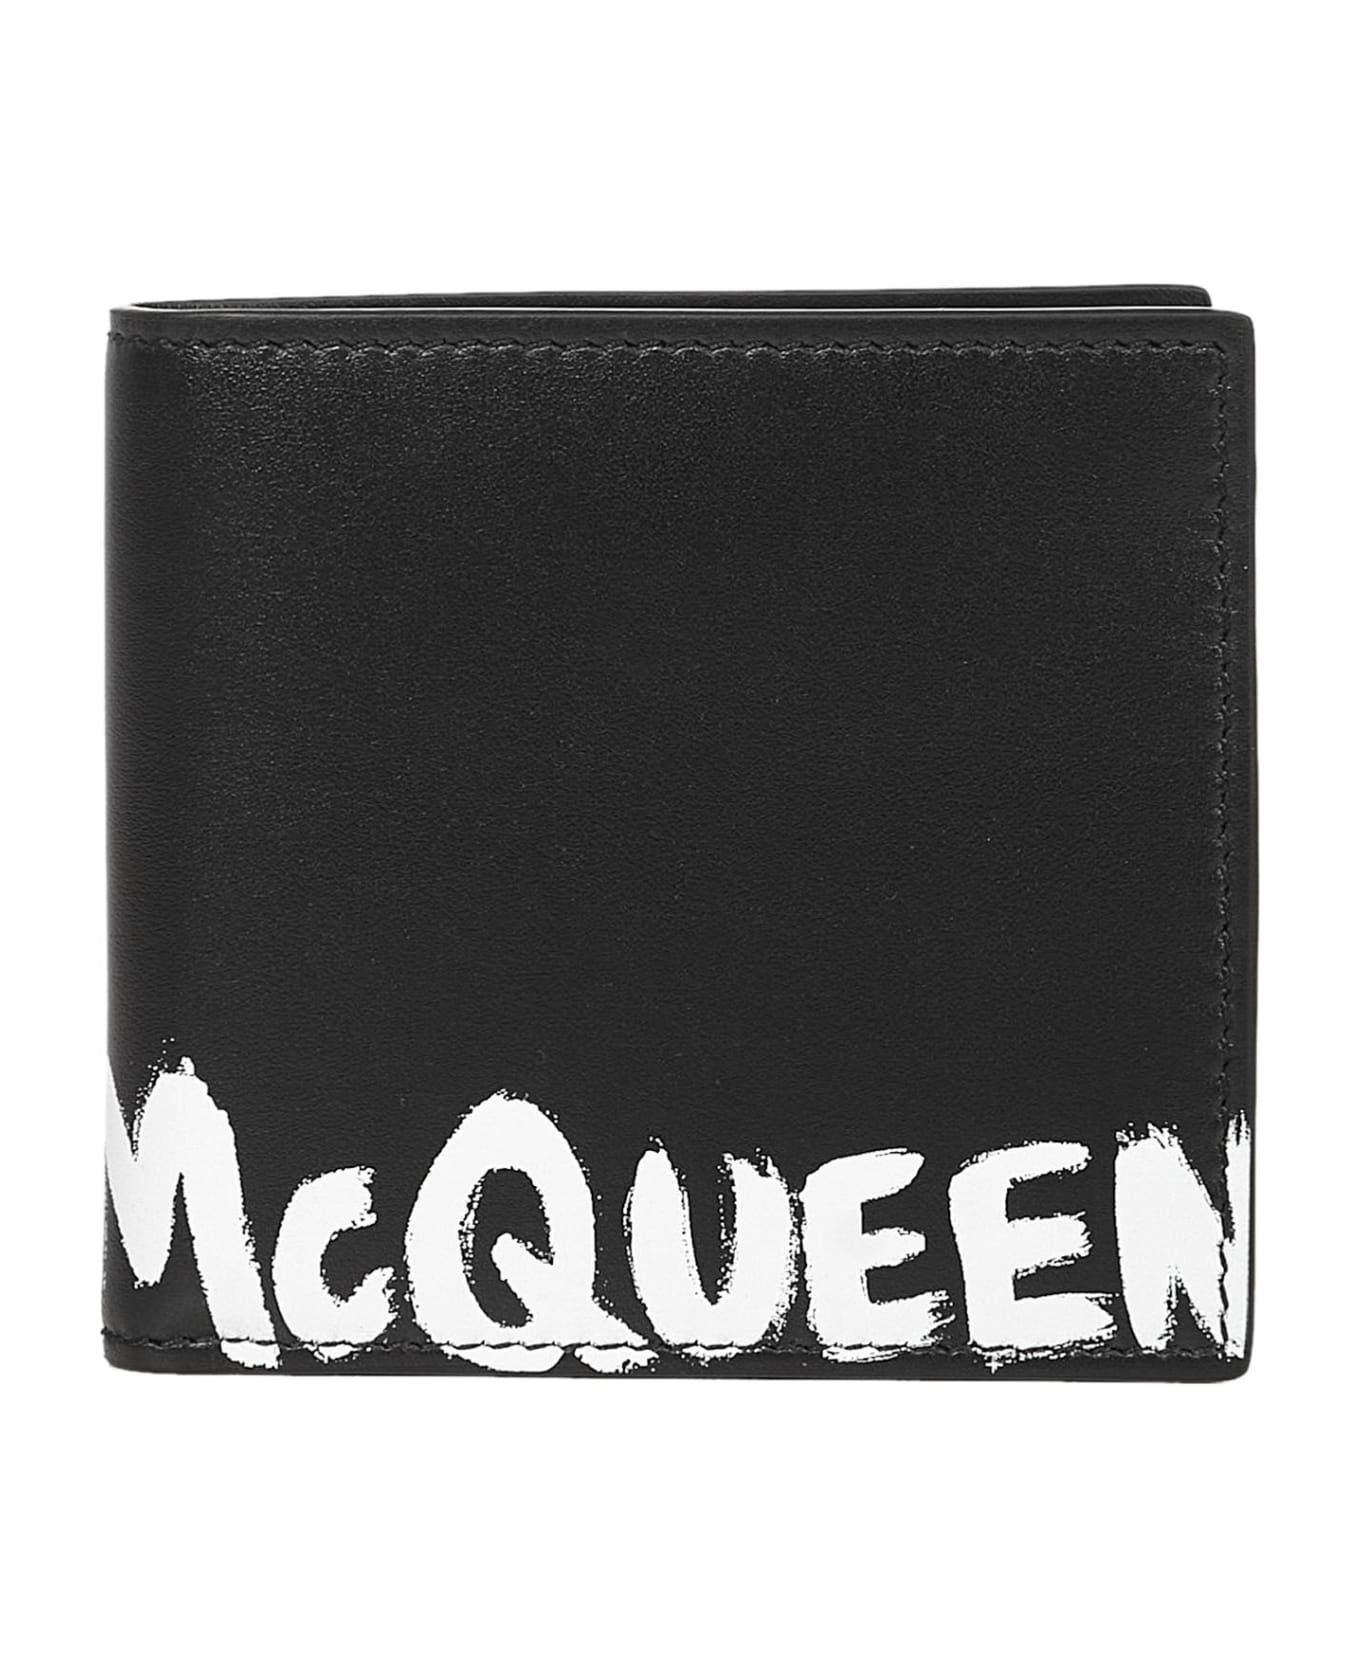 Alexander McQueen Leather Billfold Wallet - Black